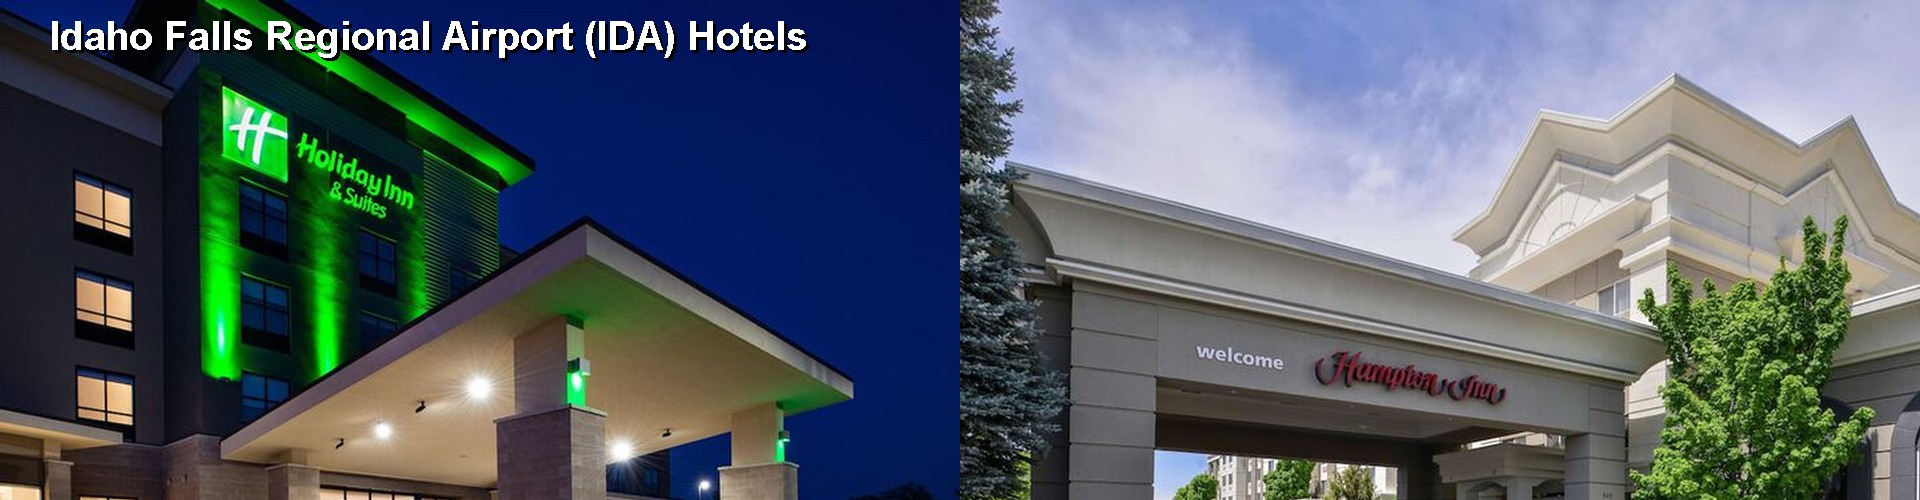 5 Best Hotels near Idaho Falls Regional Airport (IDA)